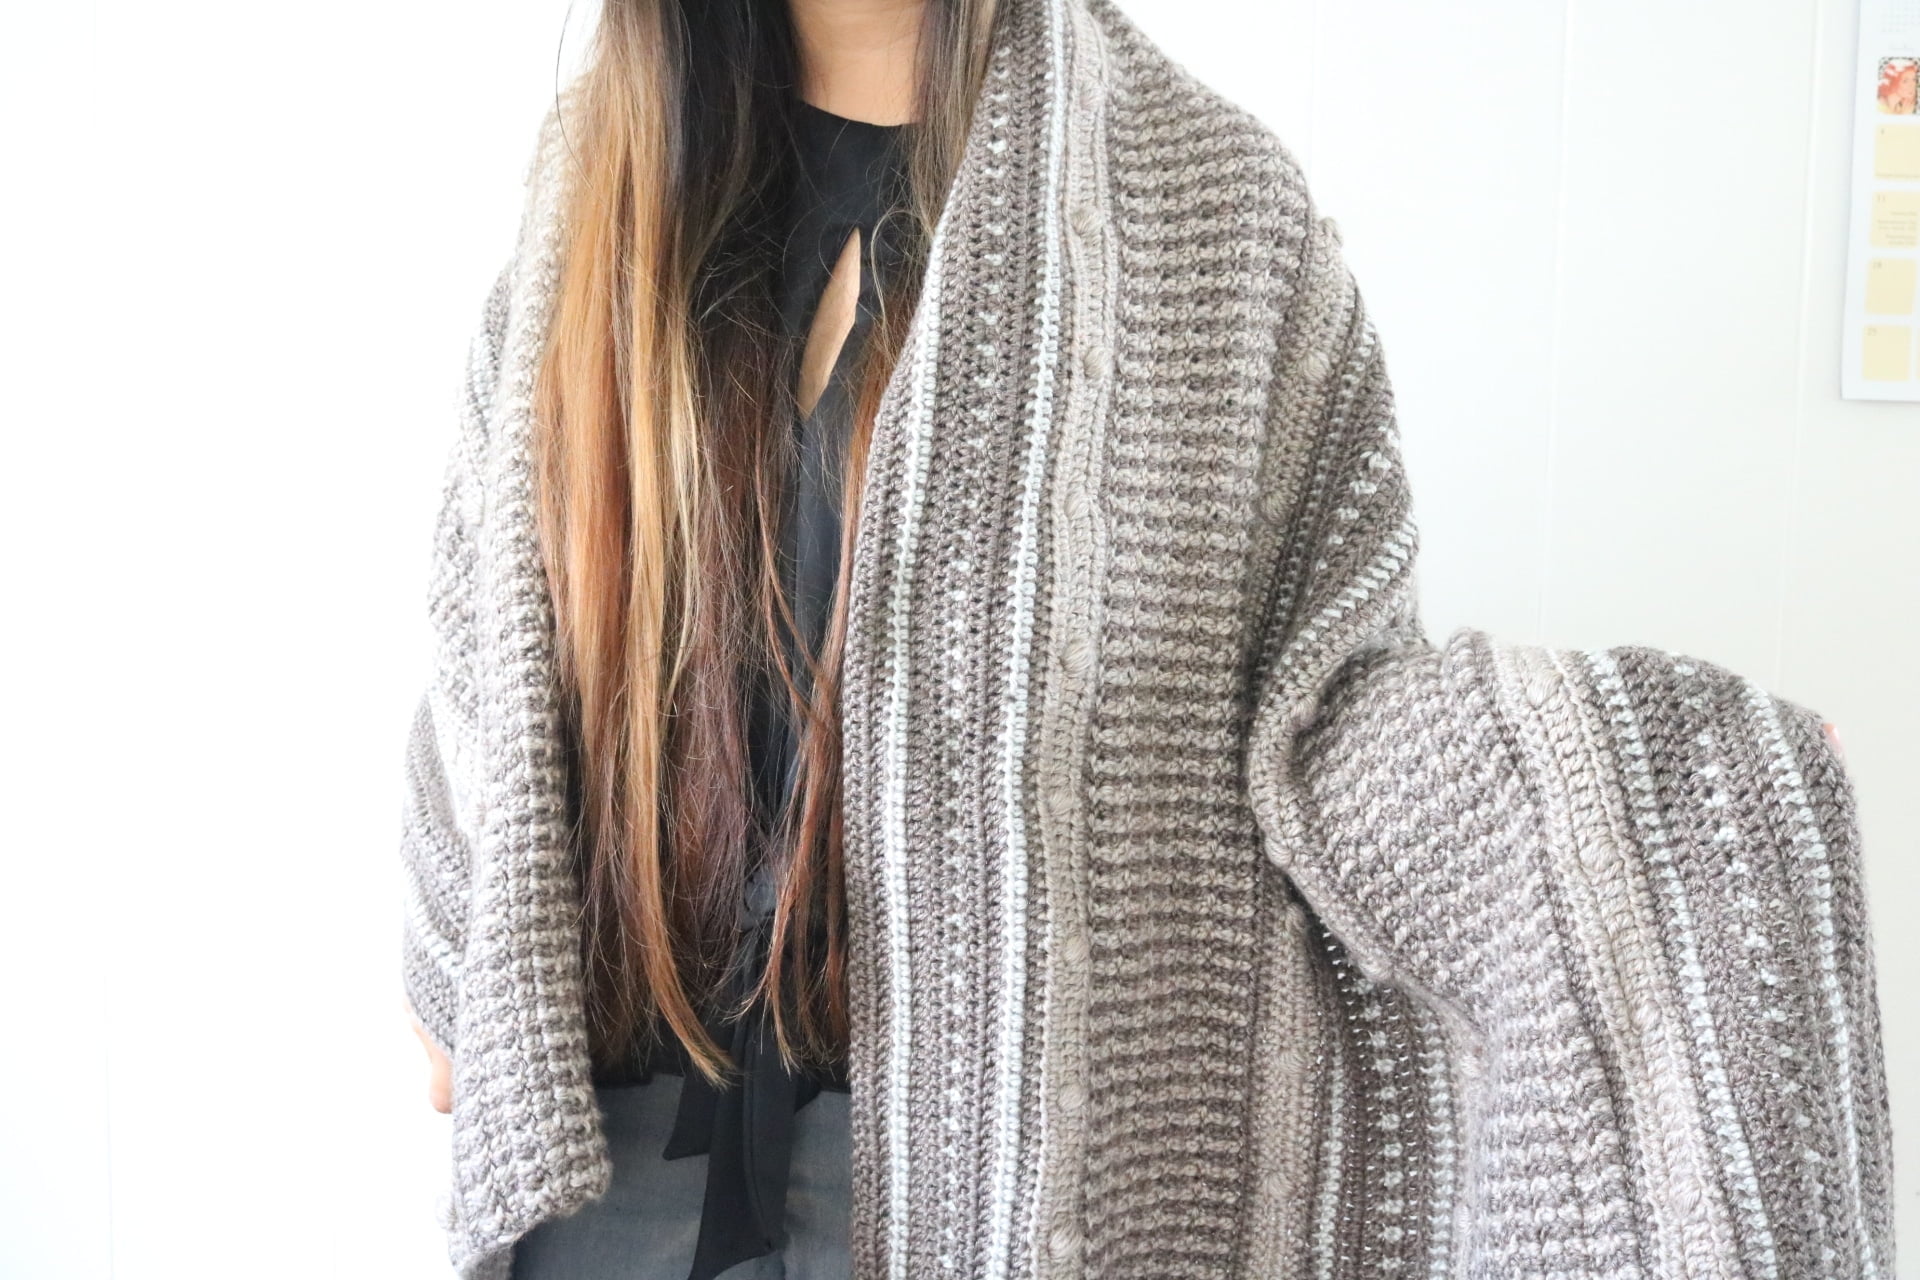 Girl wearing a textured crochet blanket wrap